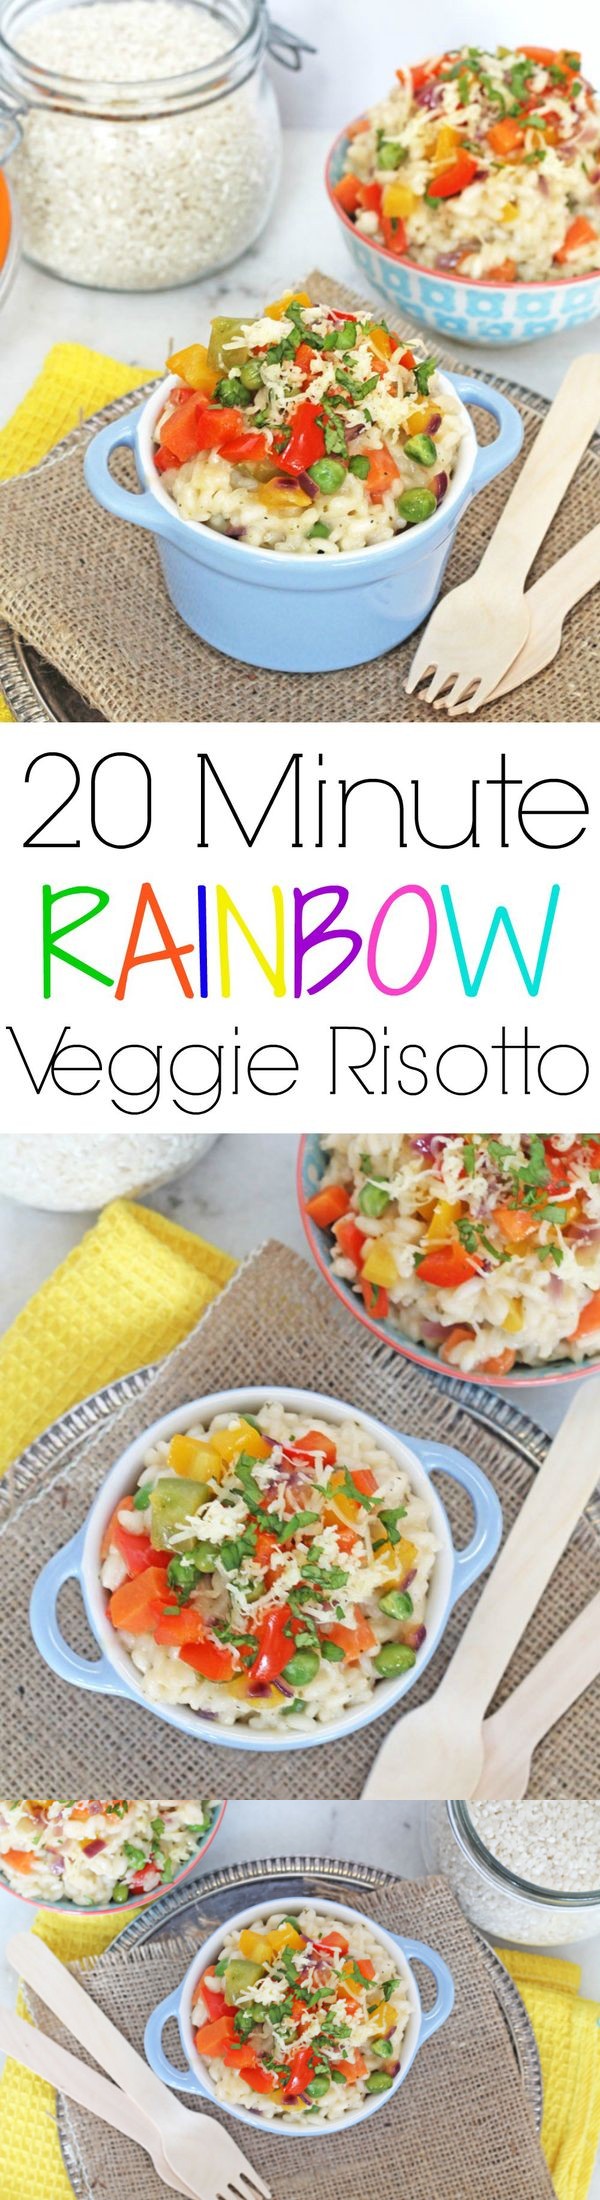 20 Minute Rainbow Veggie Risotto